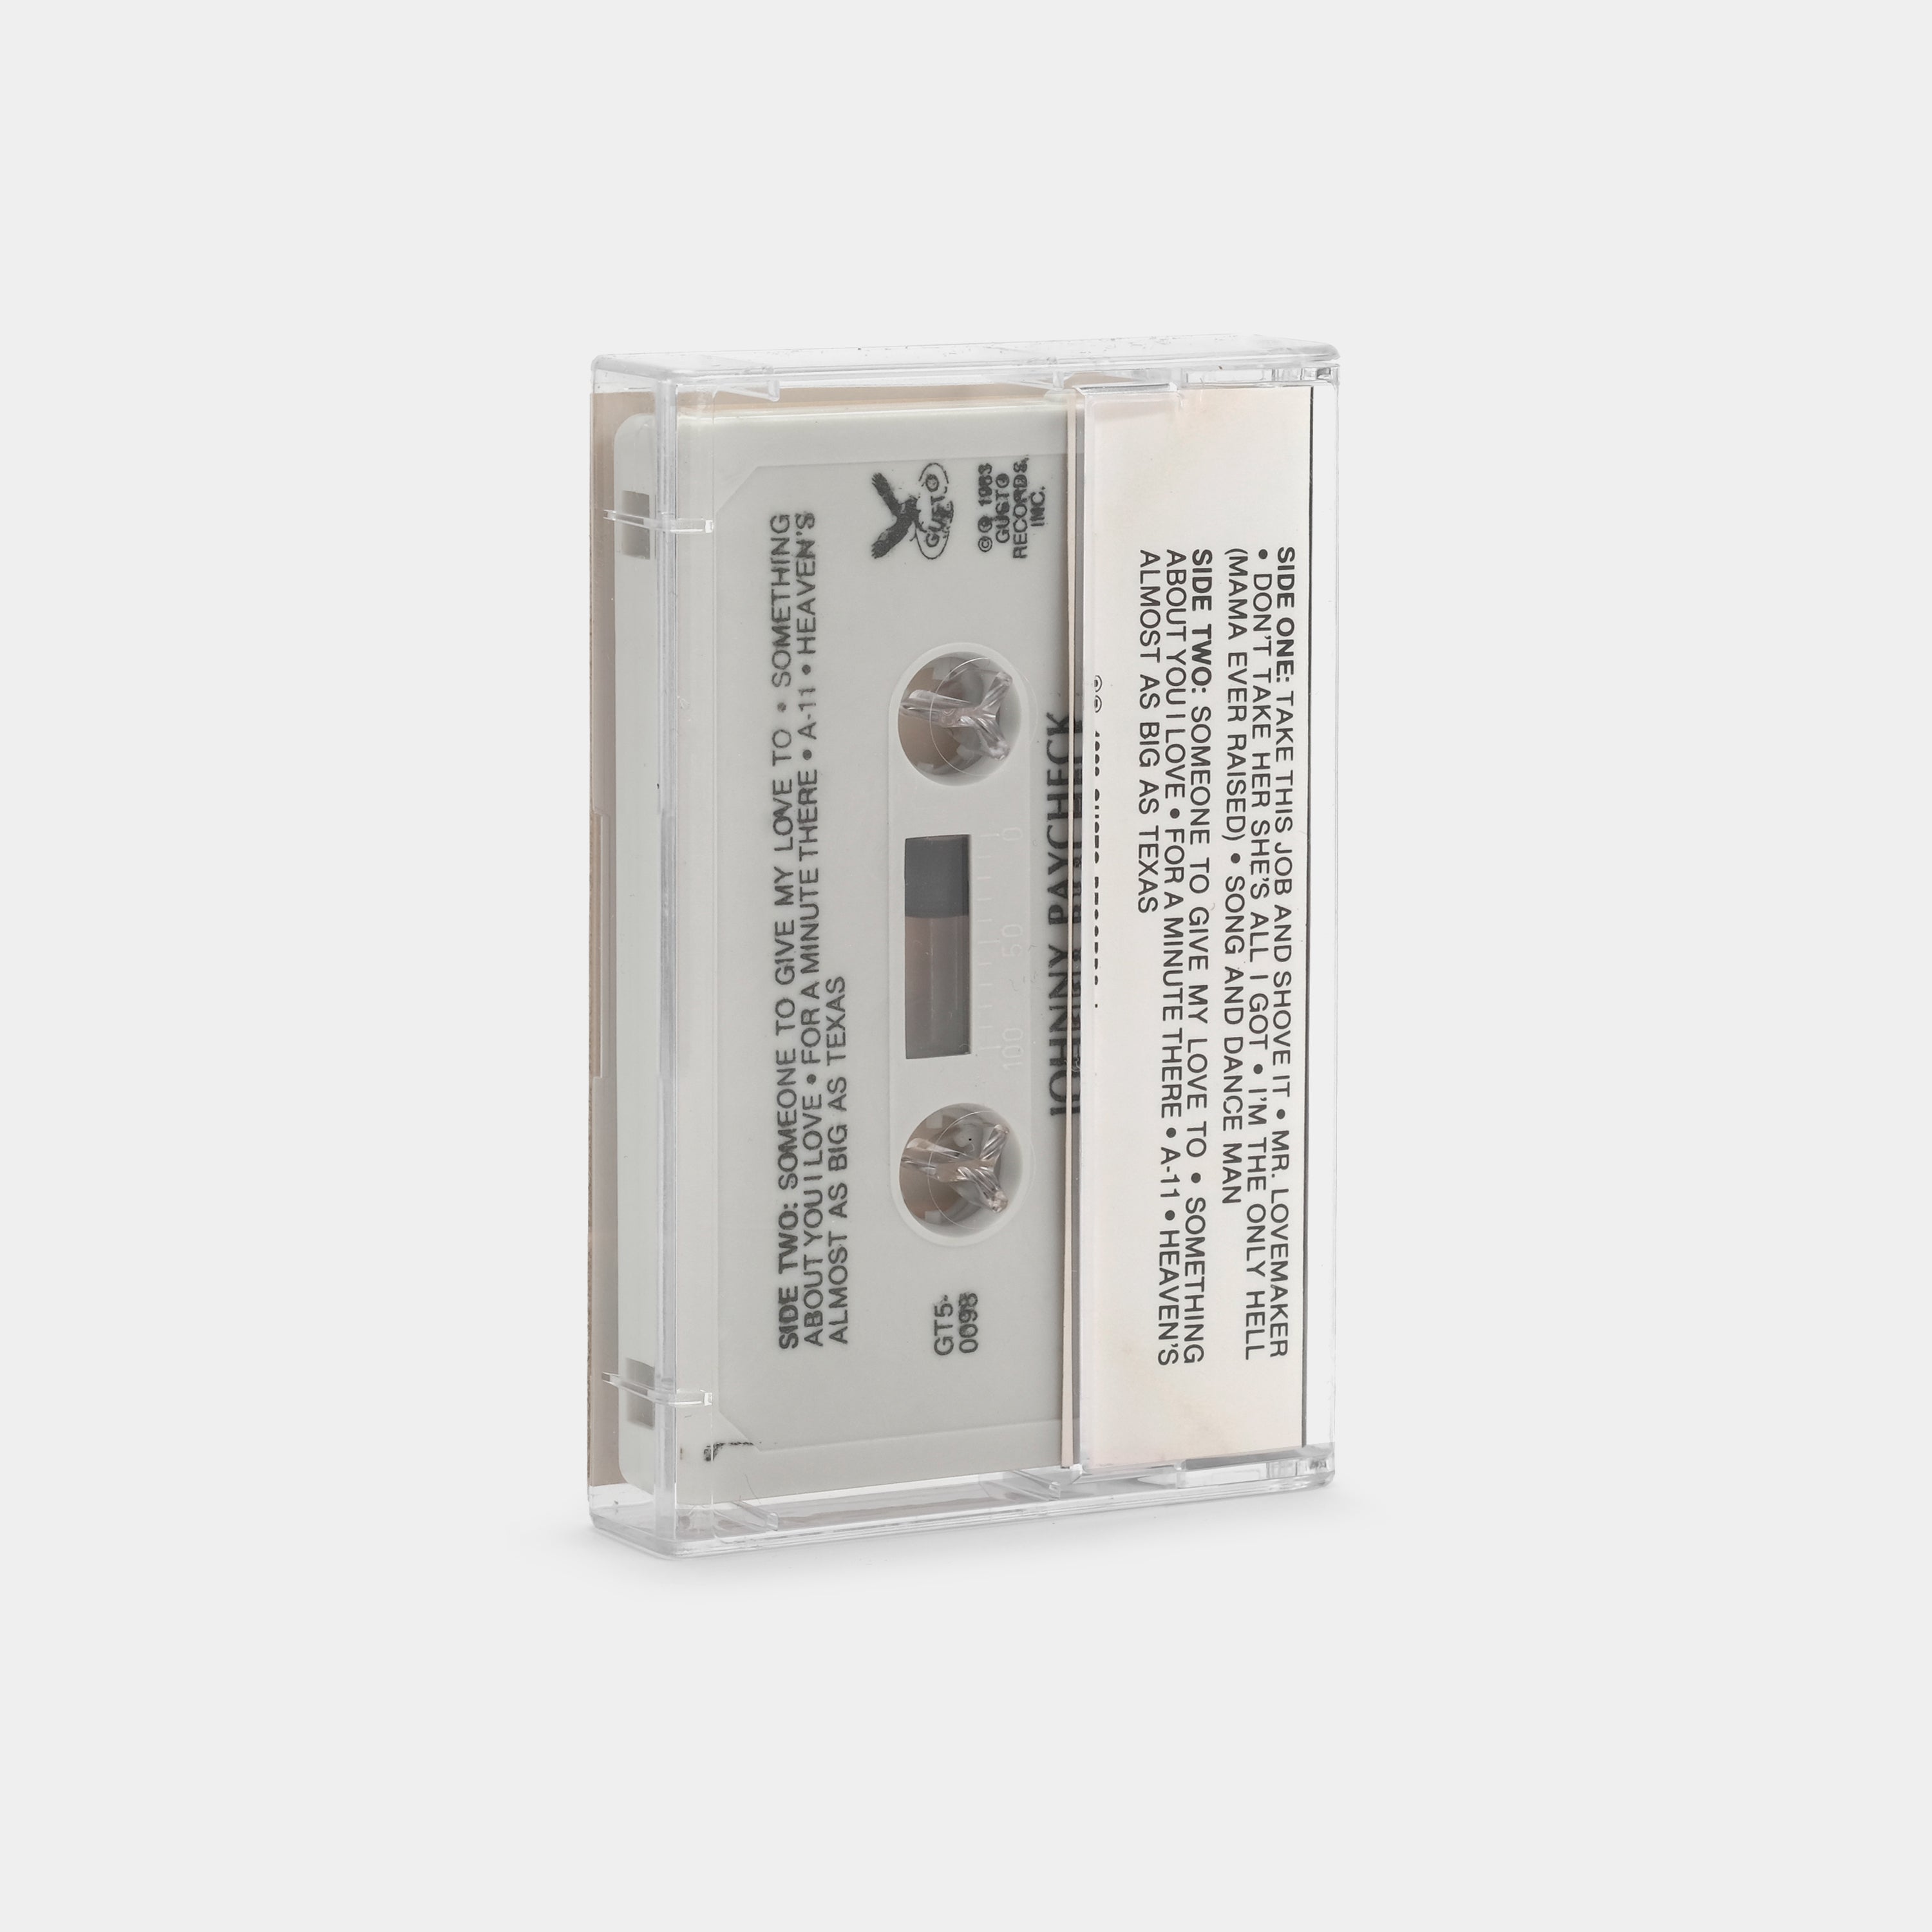 Johnny Paycheck - Golden Hits Cassette Tape